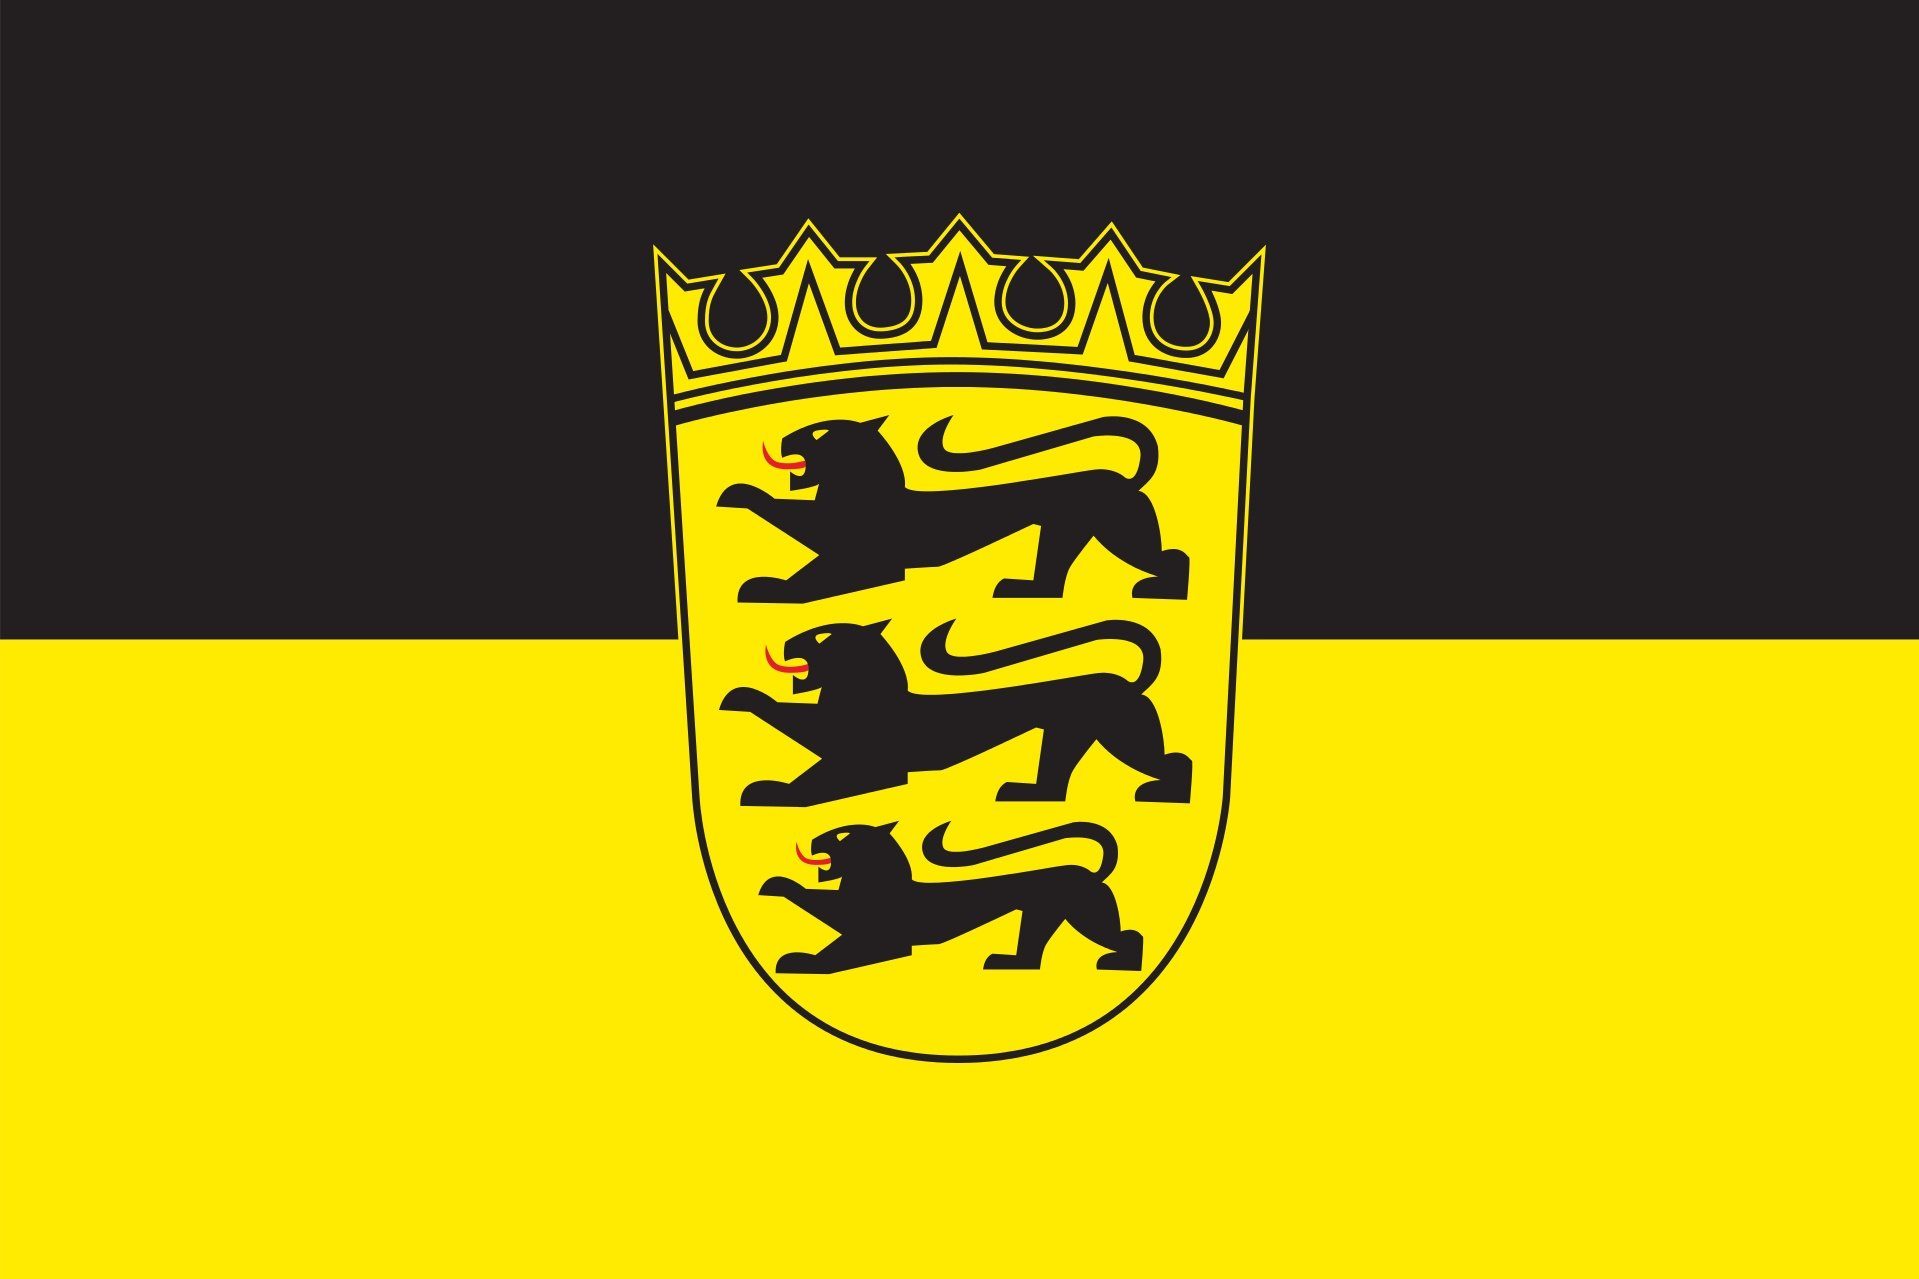 Flagge g/m² flaggenmeer Querformat mit Wappen Baden-Württemberg 120